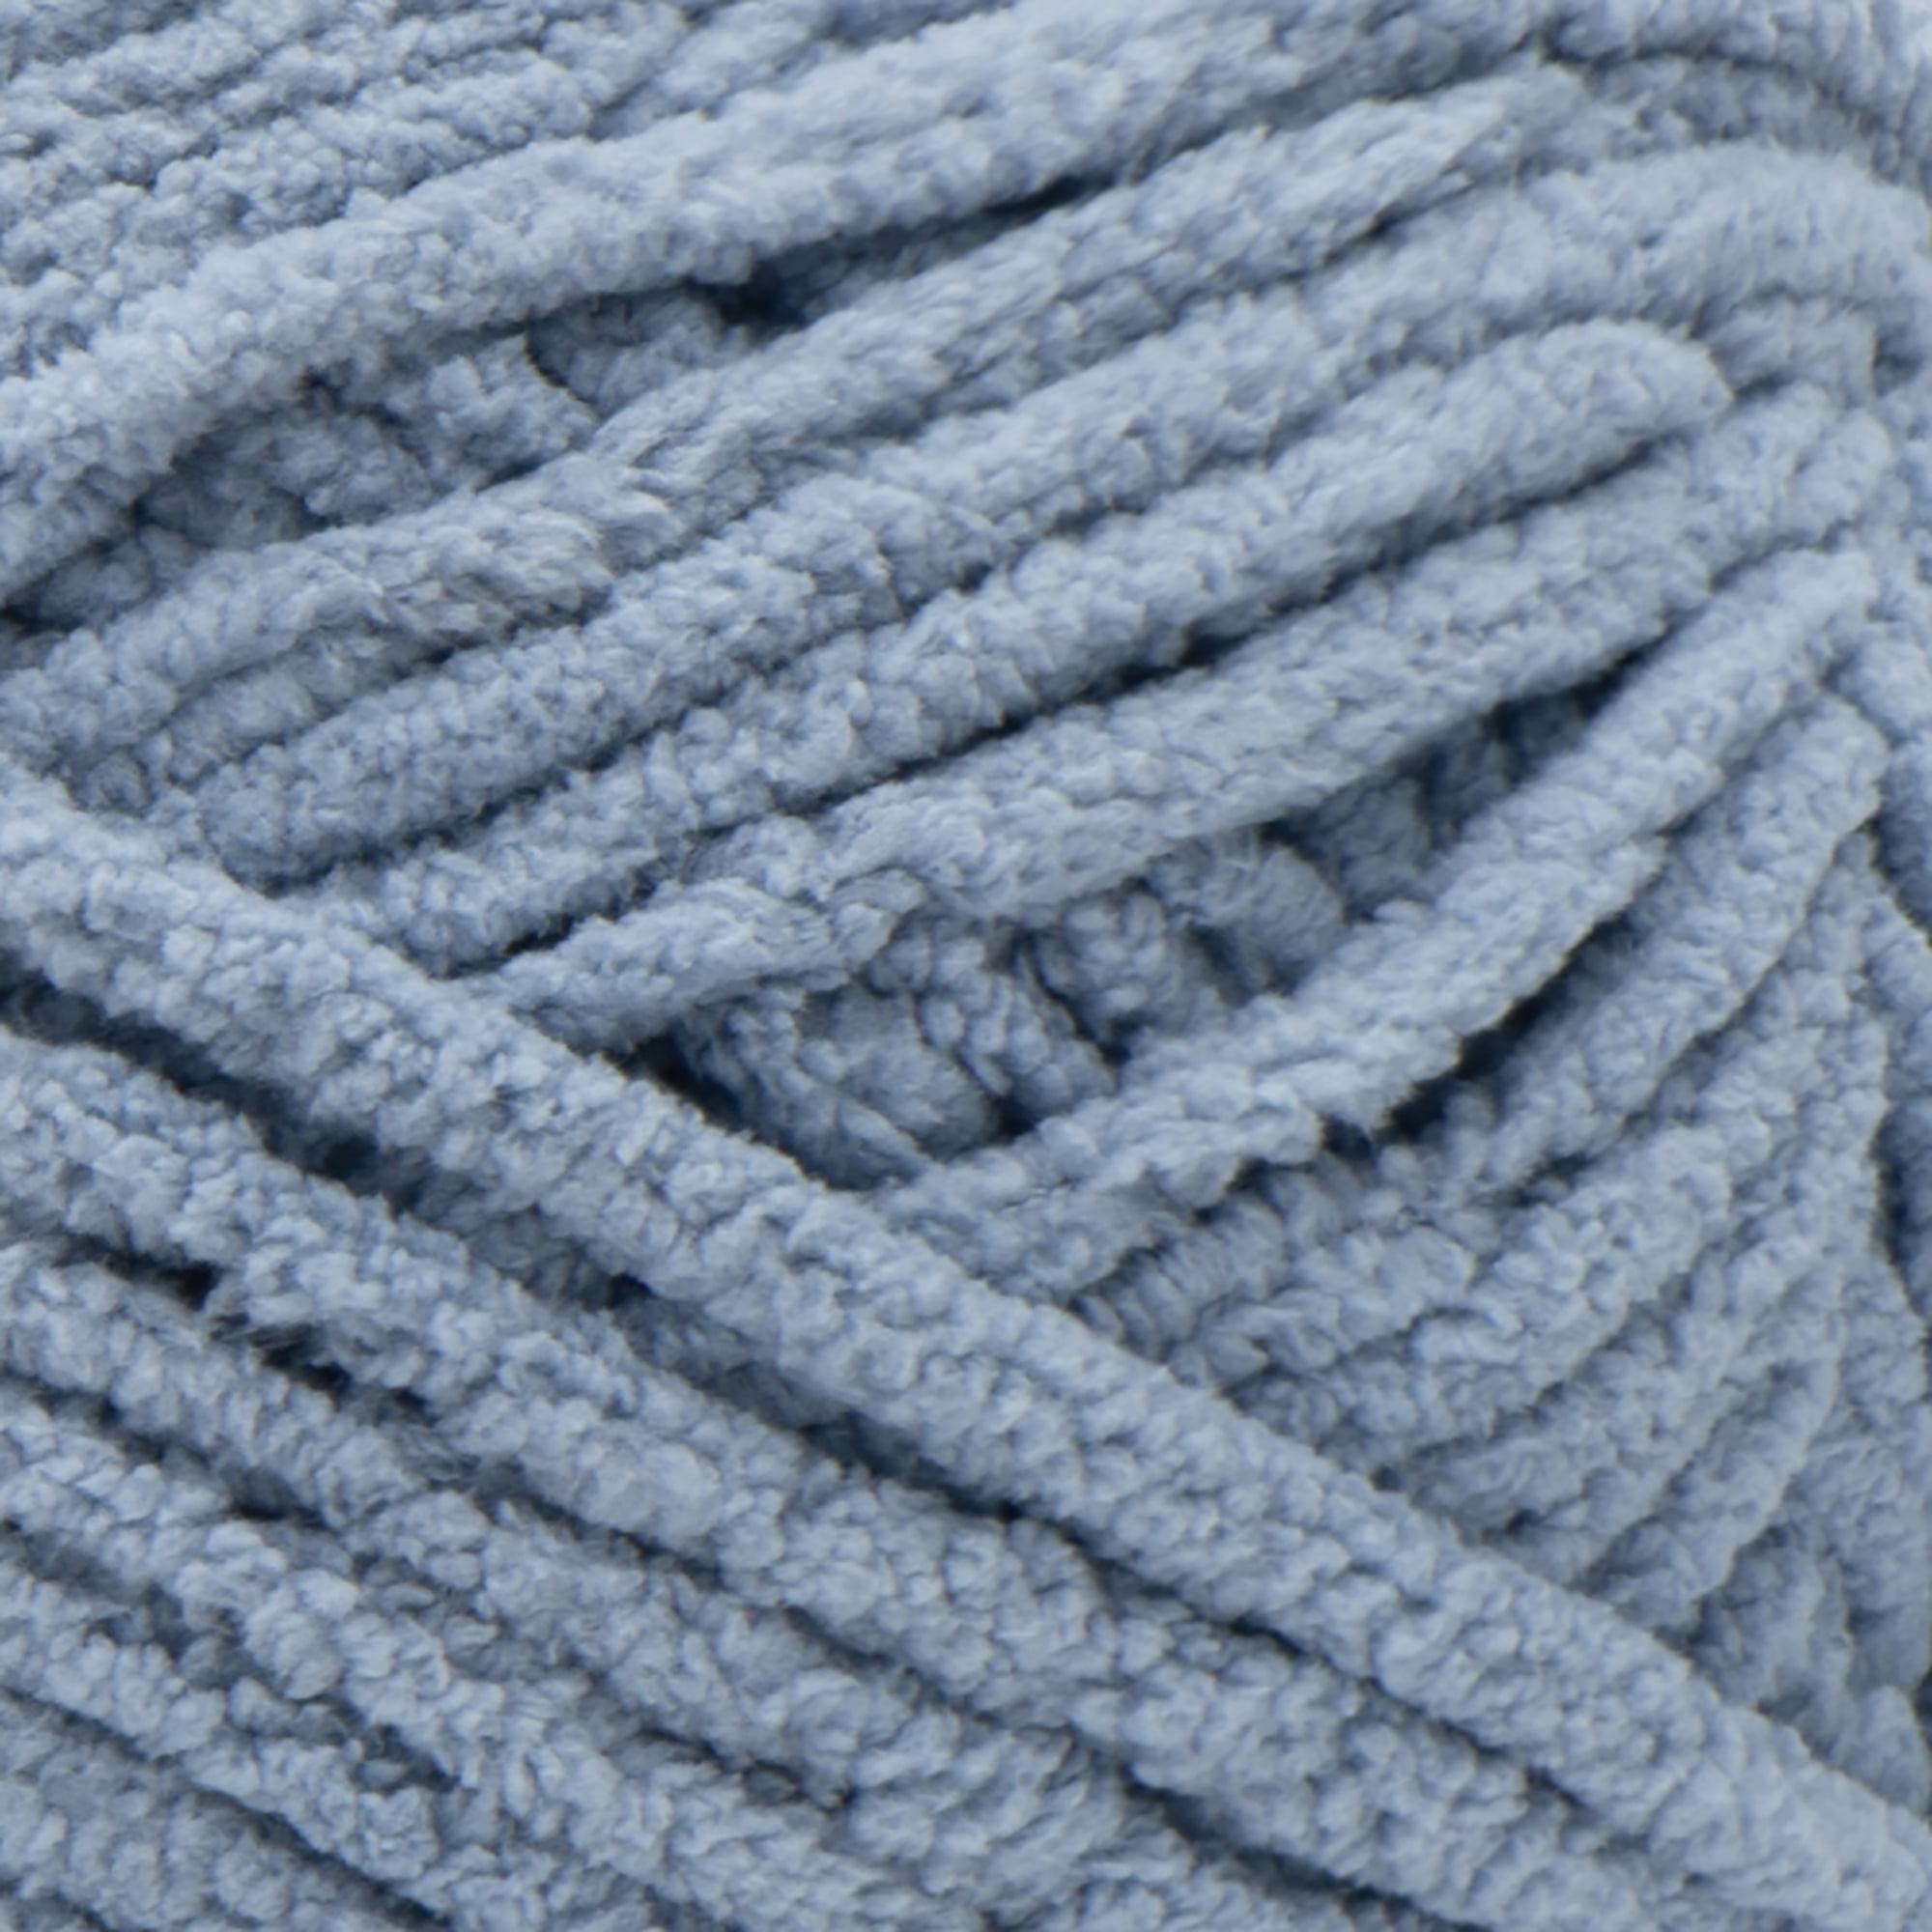 Bernat Blanket Yarn Cornflower Twist Blue White Marled 10.5 oz Bulky